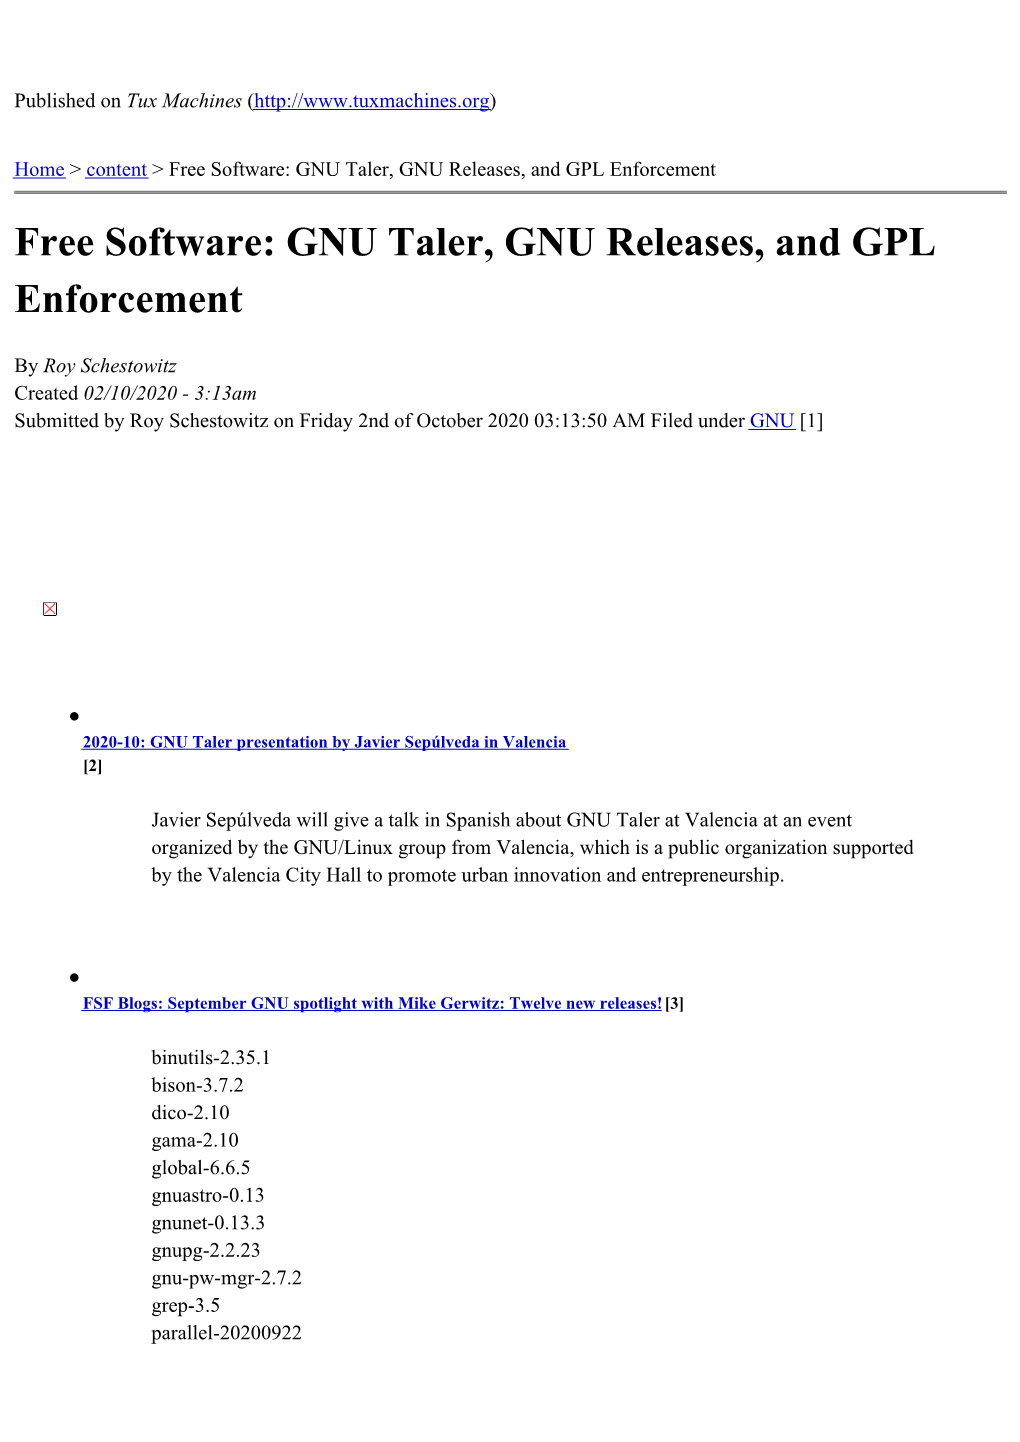 Free Software: GNU Taler, GNU Releases, and GPL Enforcement